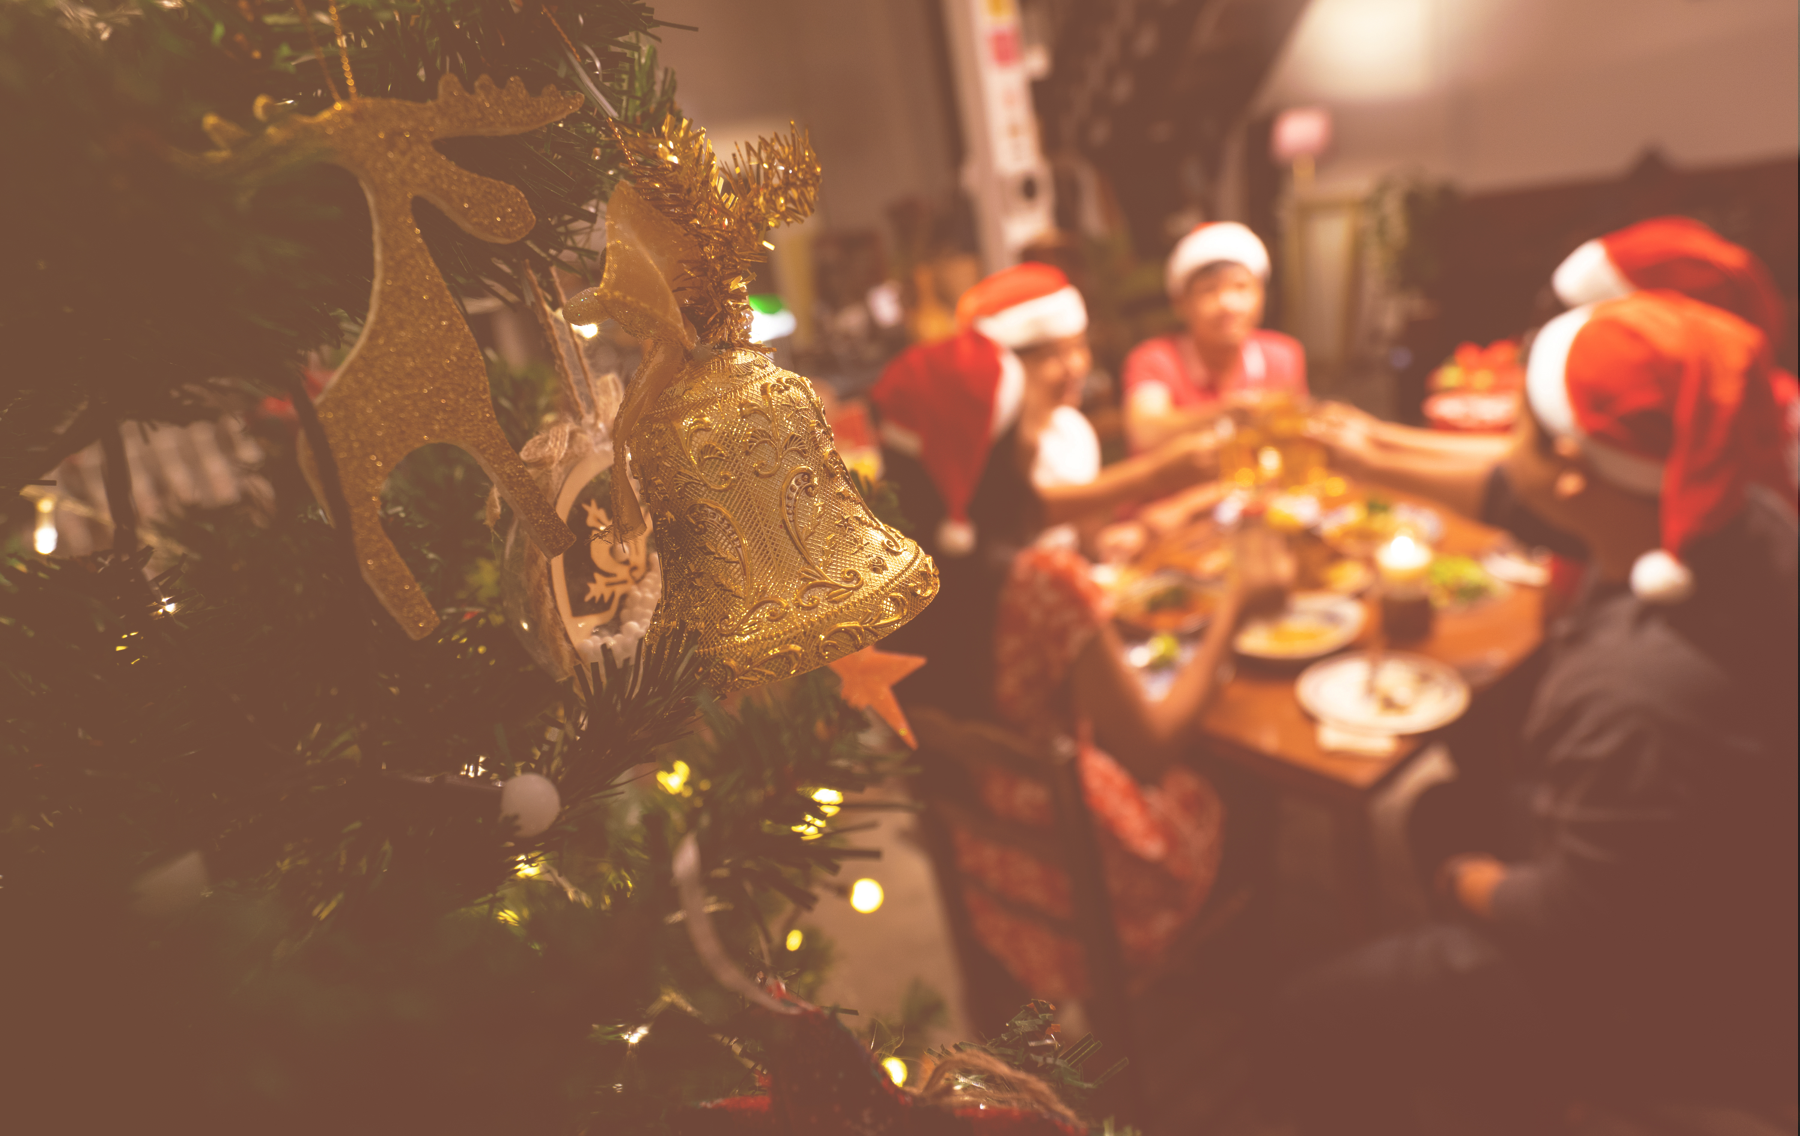 christmas traditions around the world